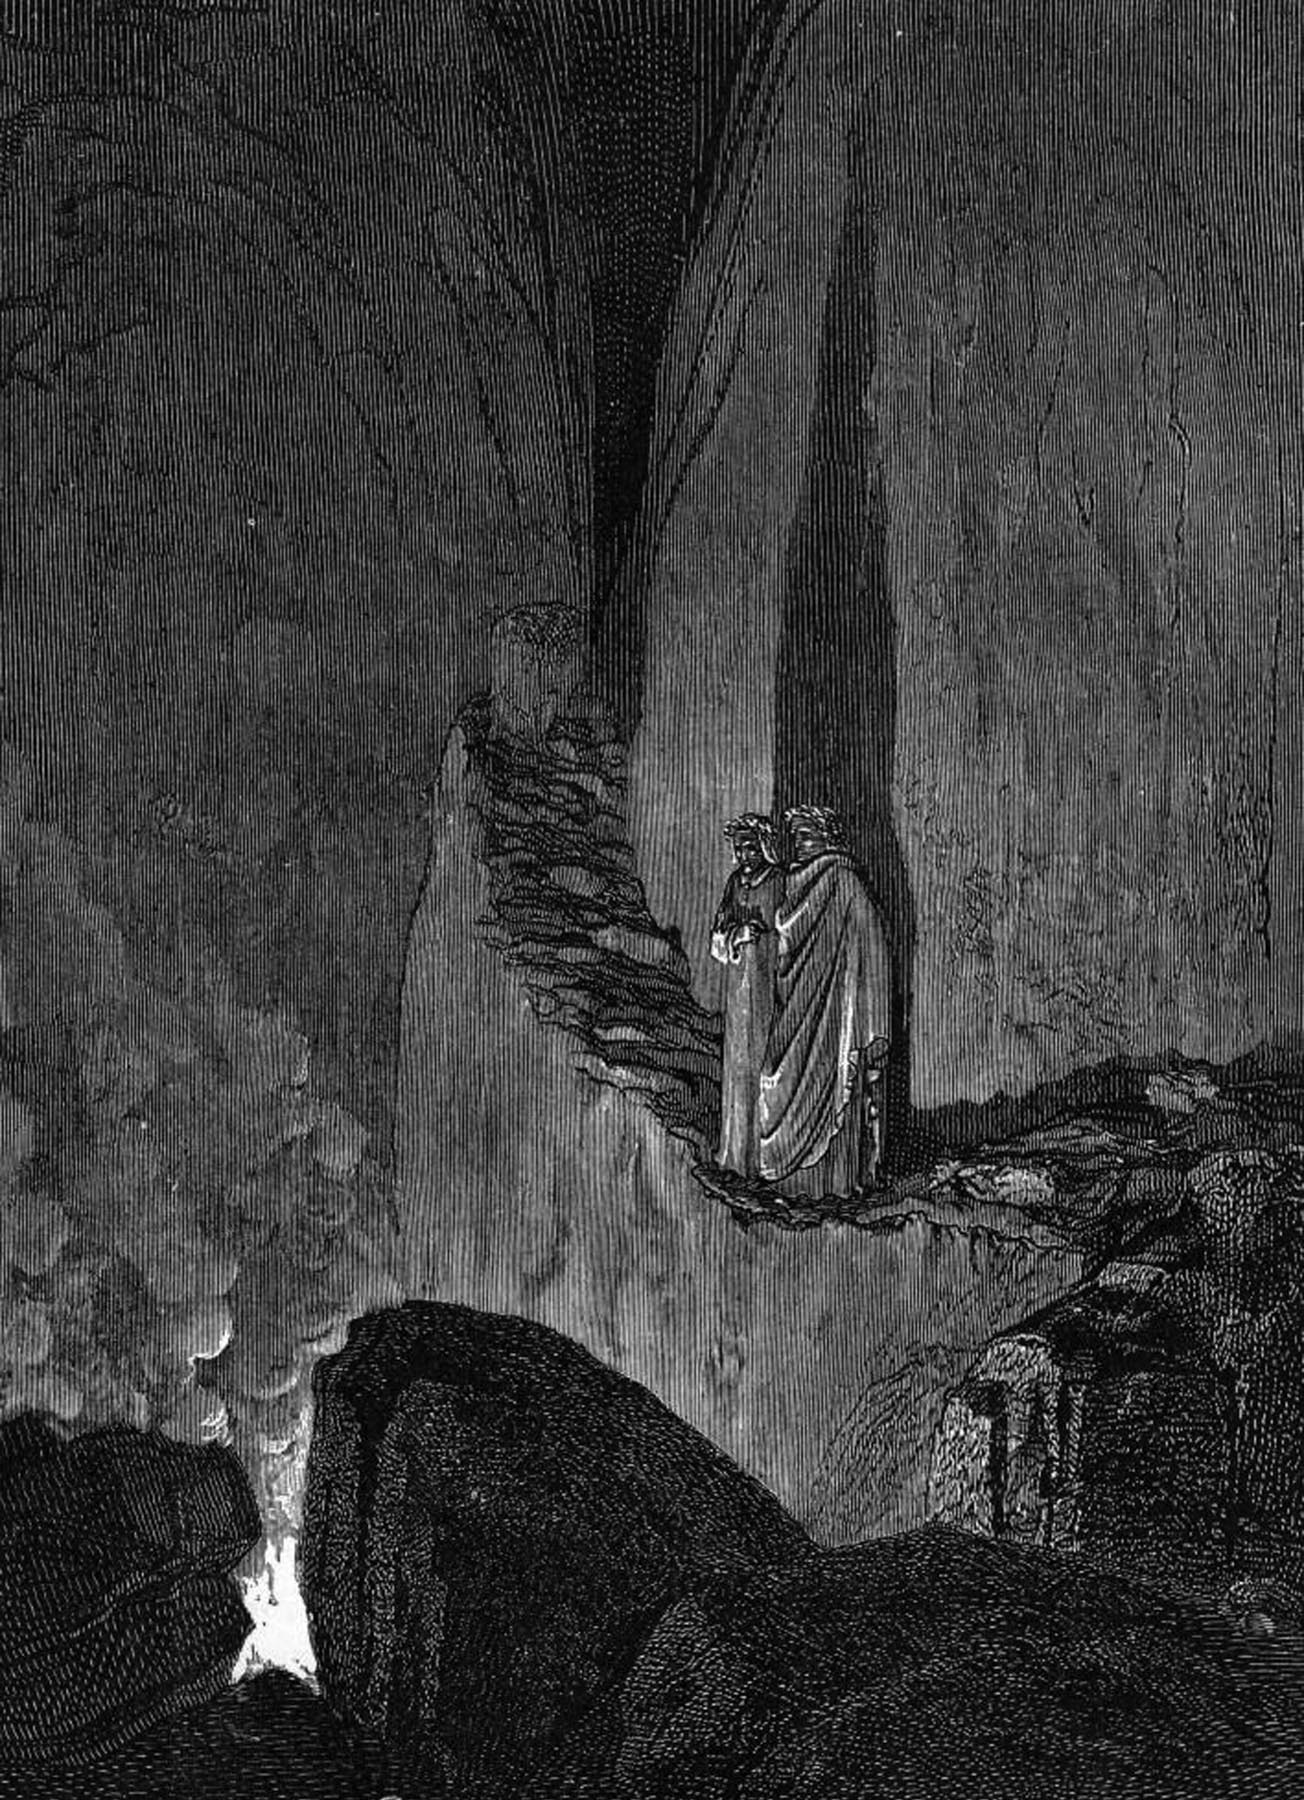 Inferno, Canto XIX - Gustave Doré 